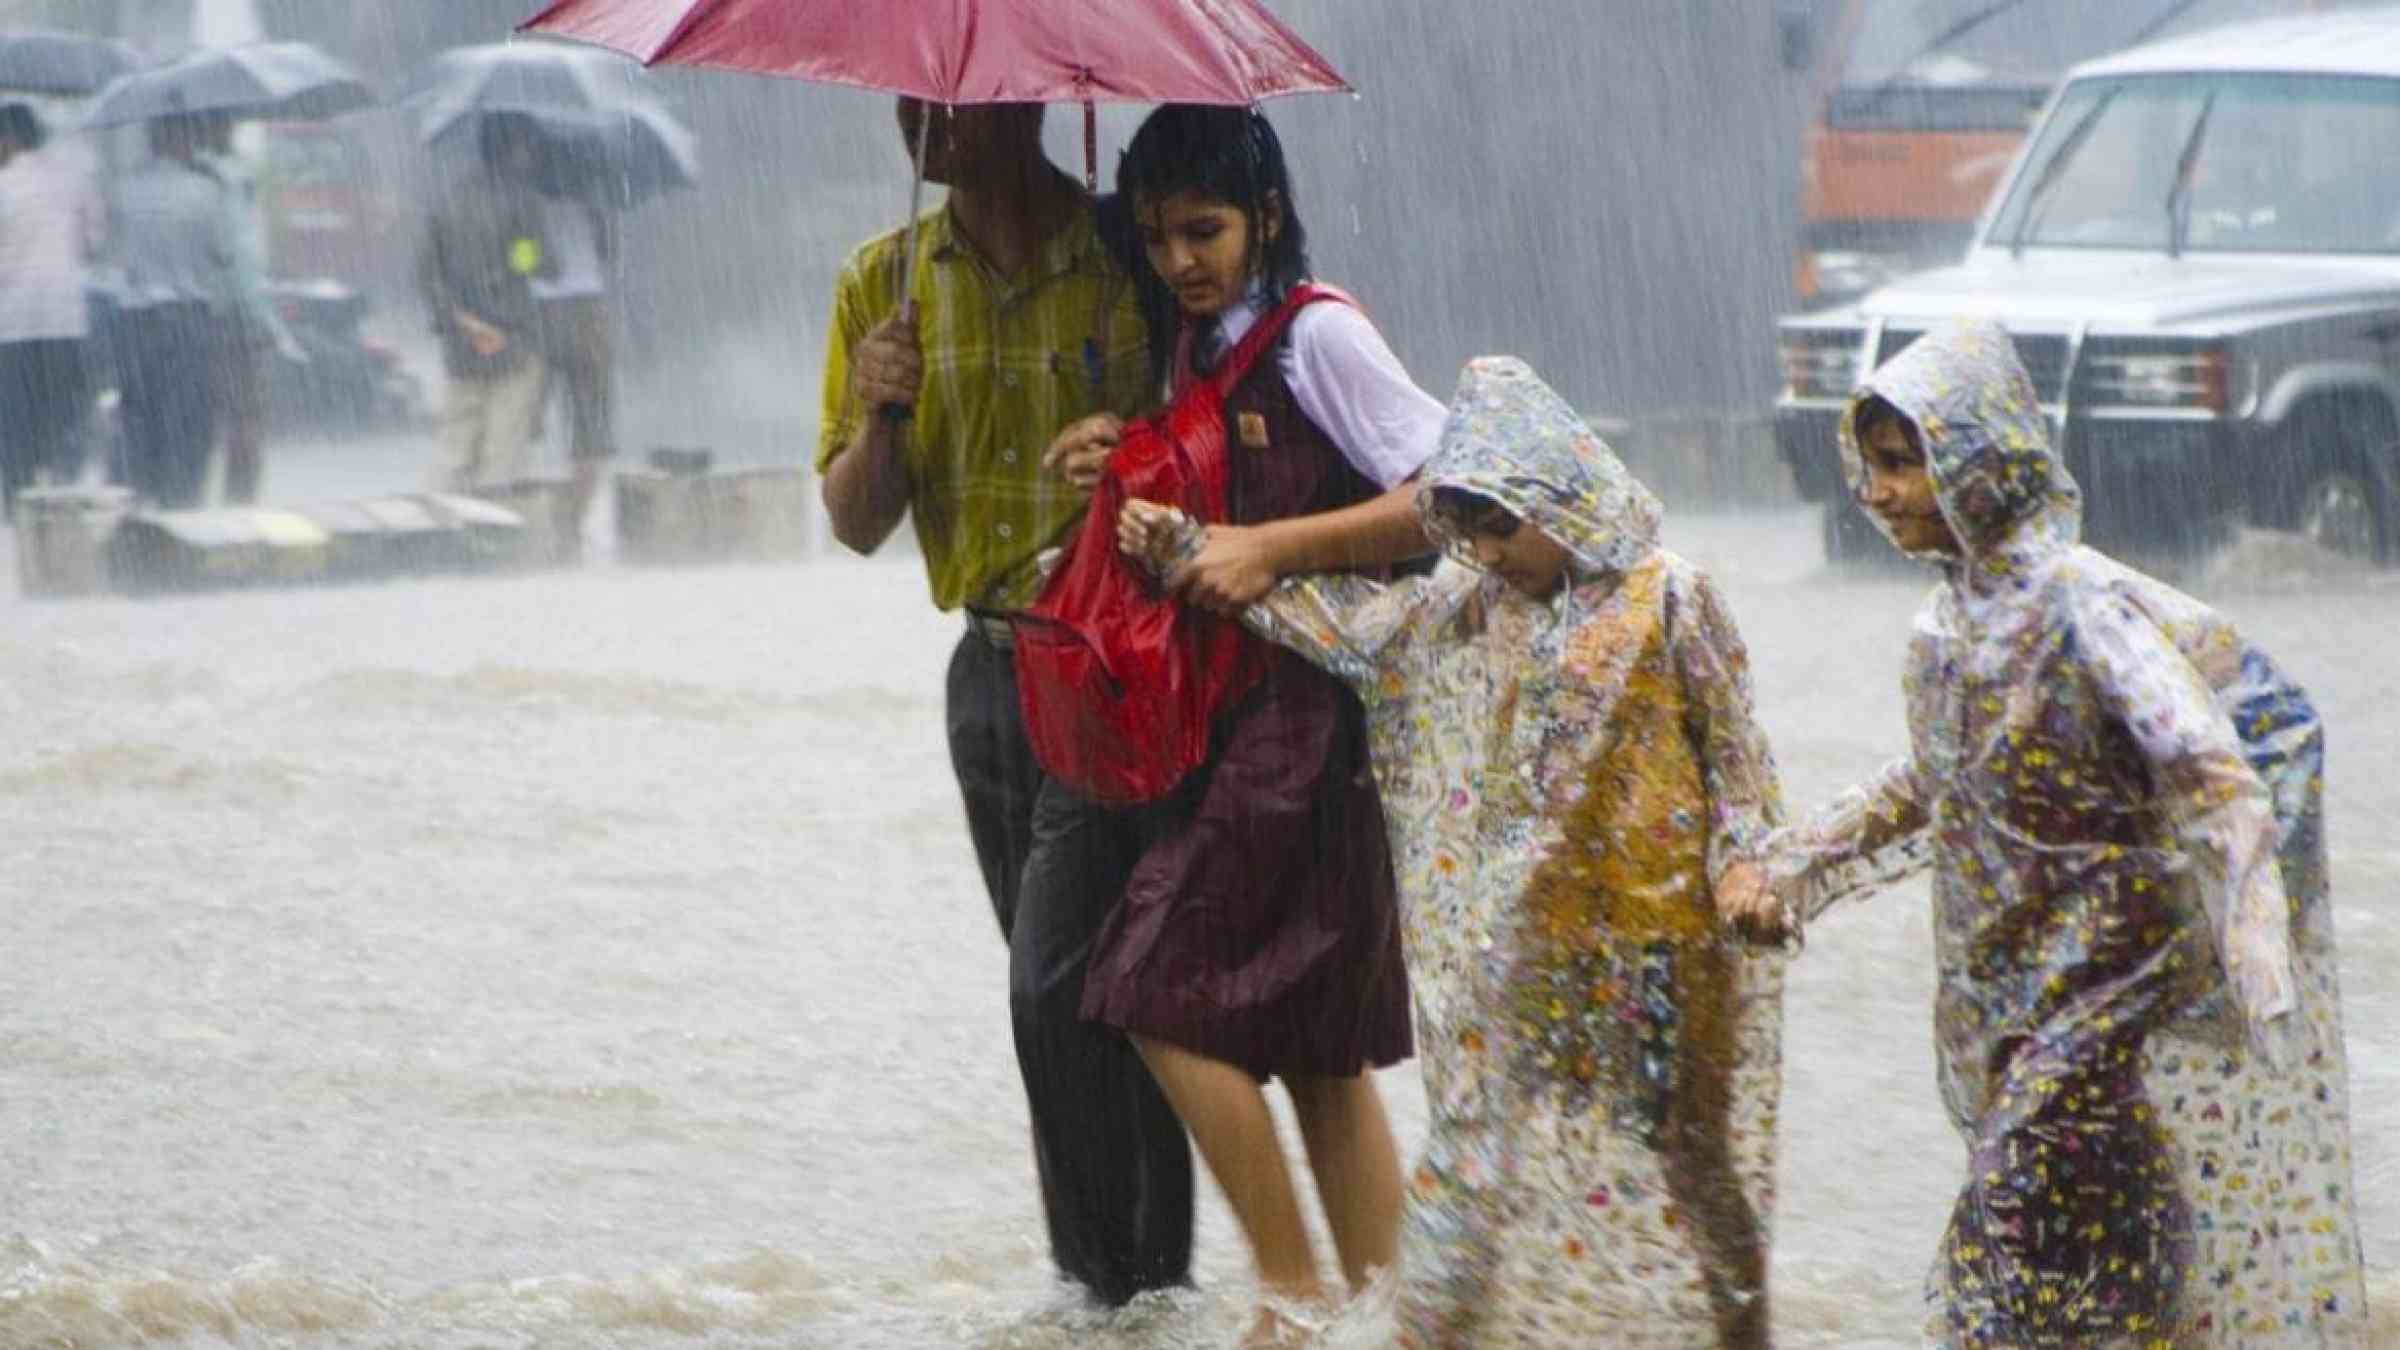 A parent accompanies three children amidst heavy rains in Mumbai, India